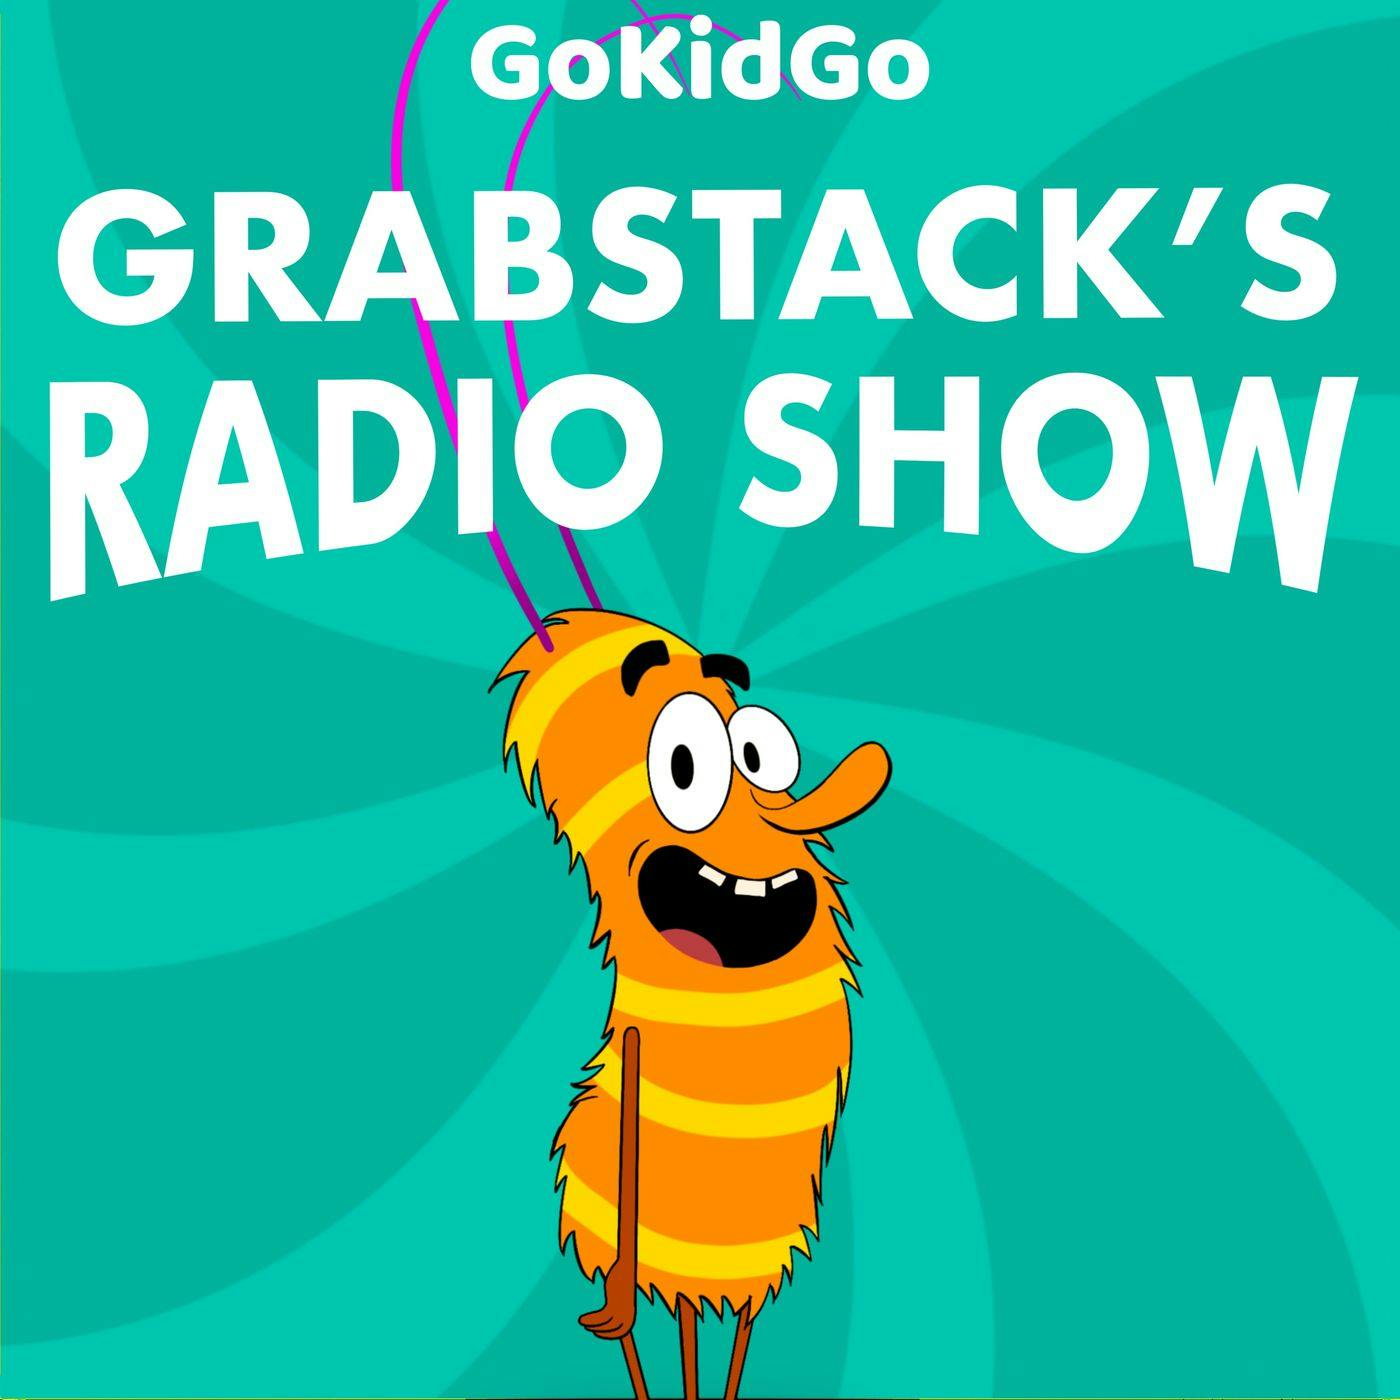 S1E7 - Grabstack Radio Show: Riddle Fest